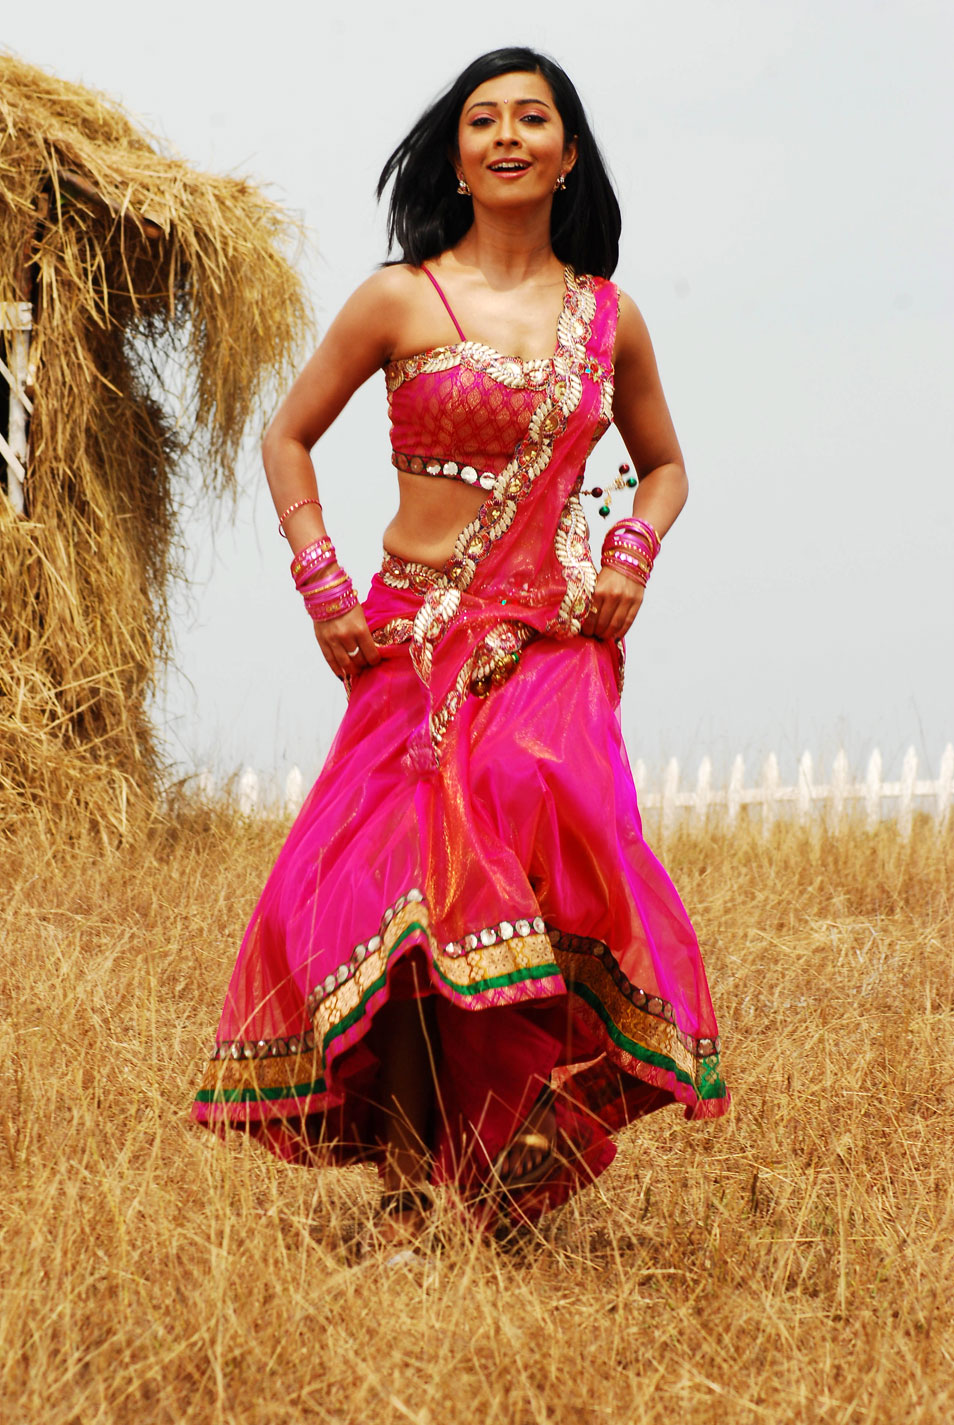 Radhika Pandit Bf Videos - Radhika Pandit s POSES Stunning and Beautiful, Have a Glance